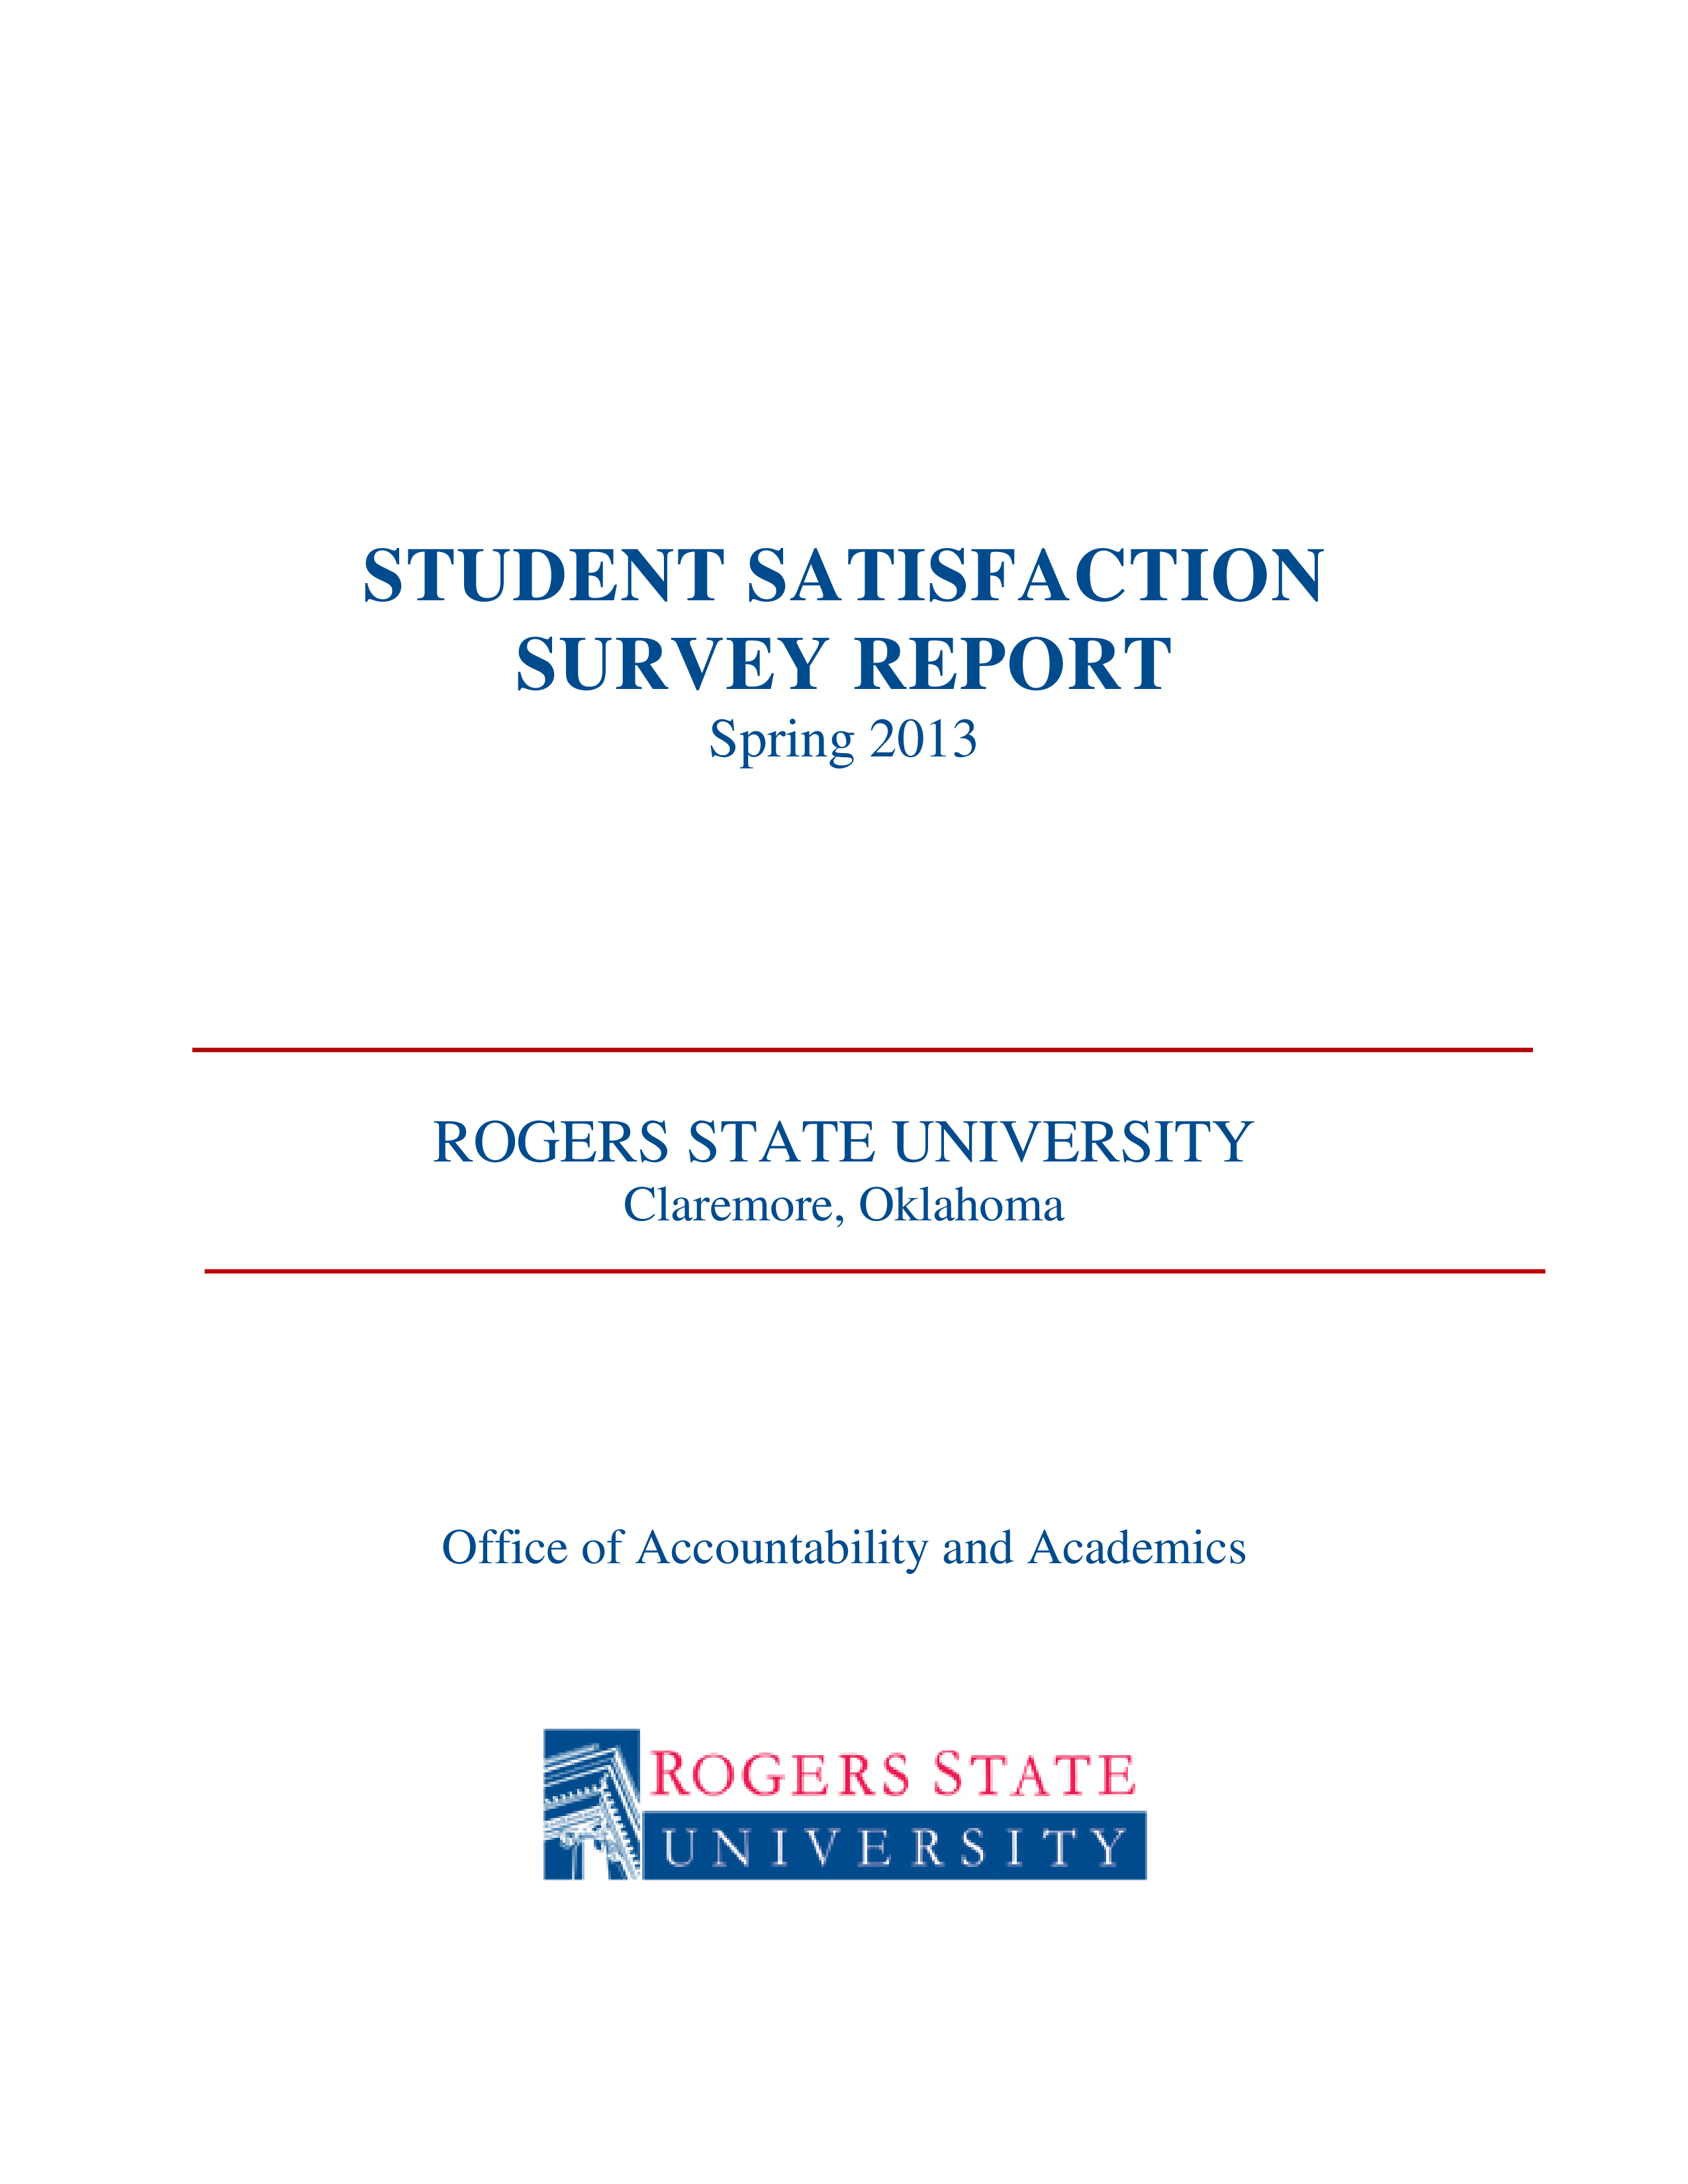 Student Satisfaction Survey Report main image